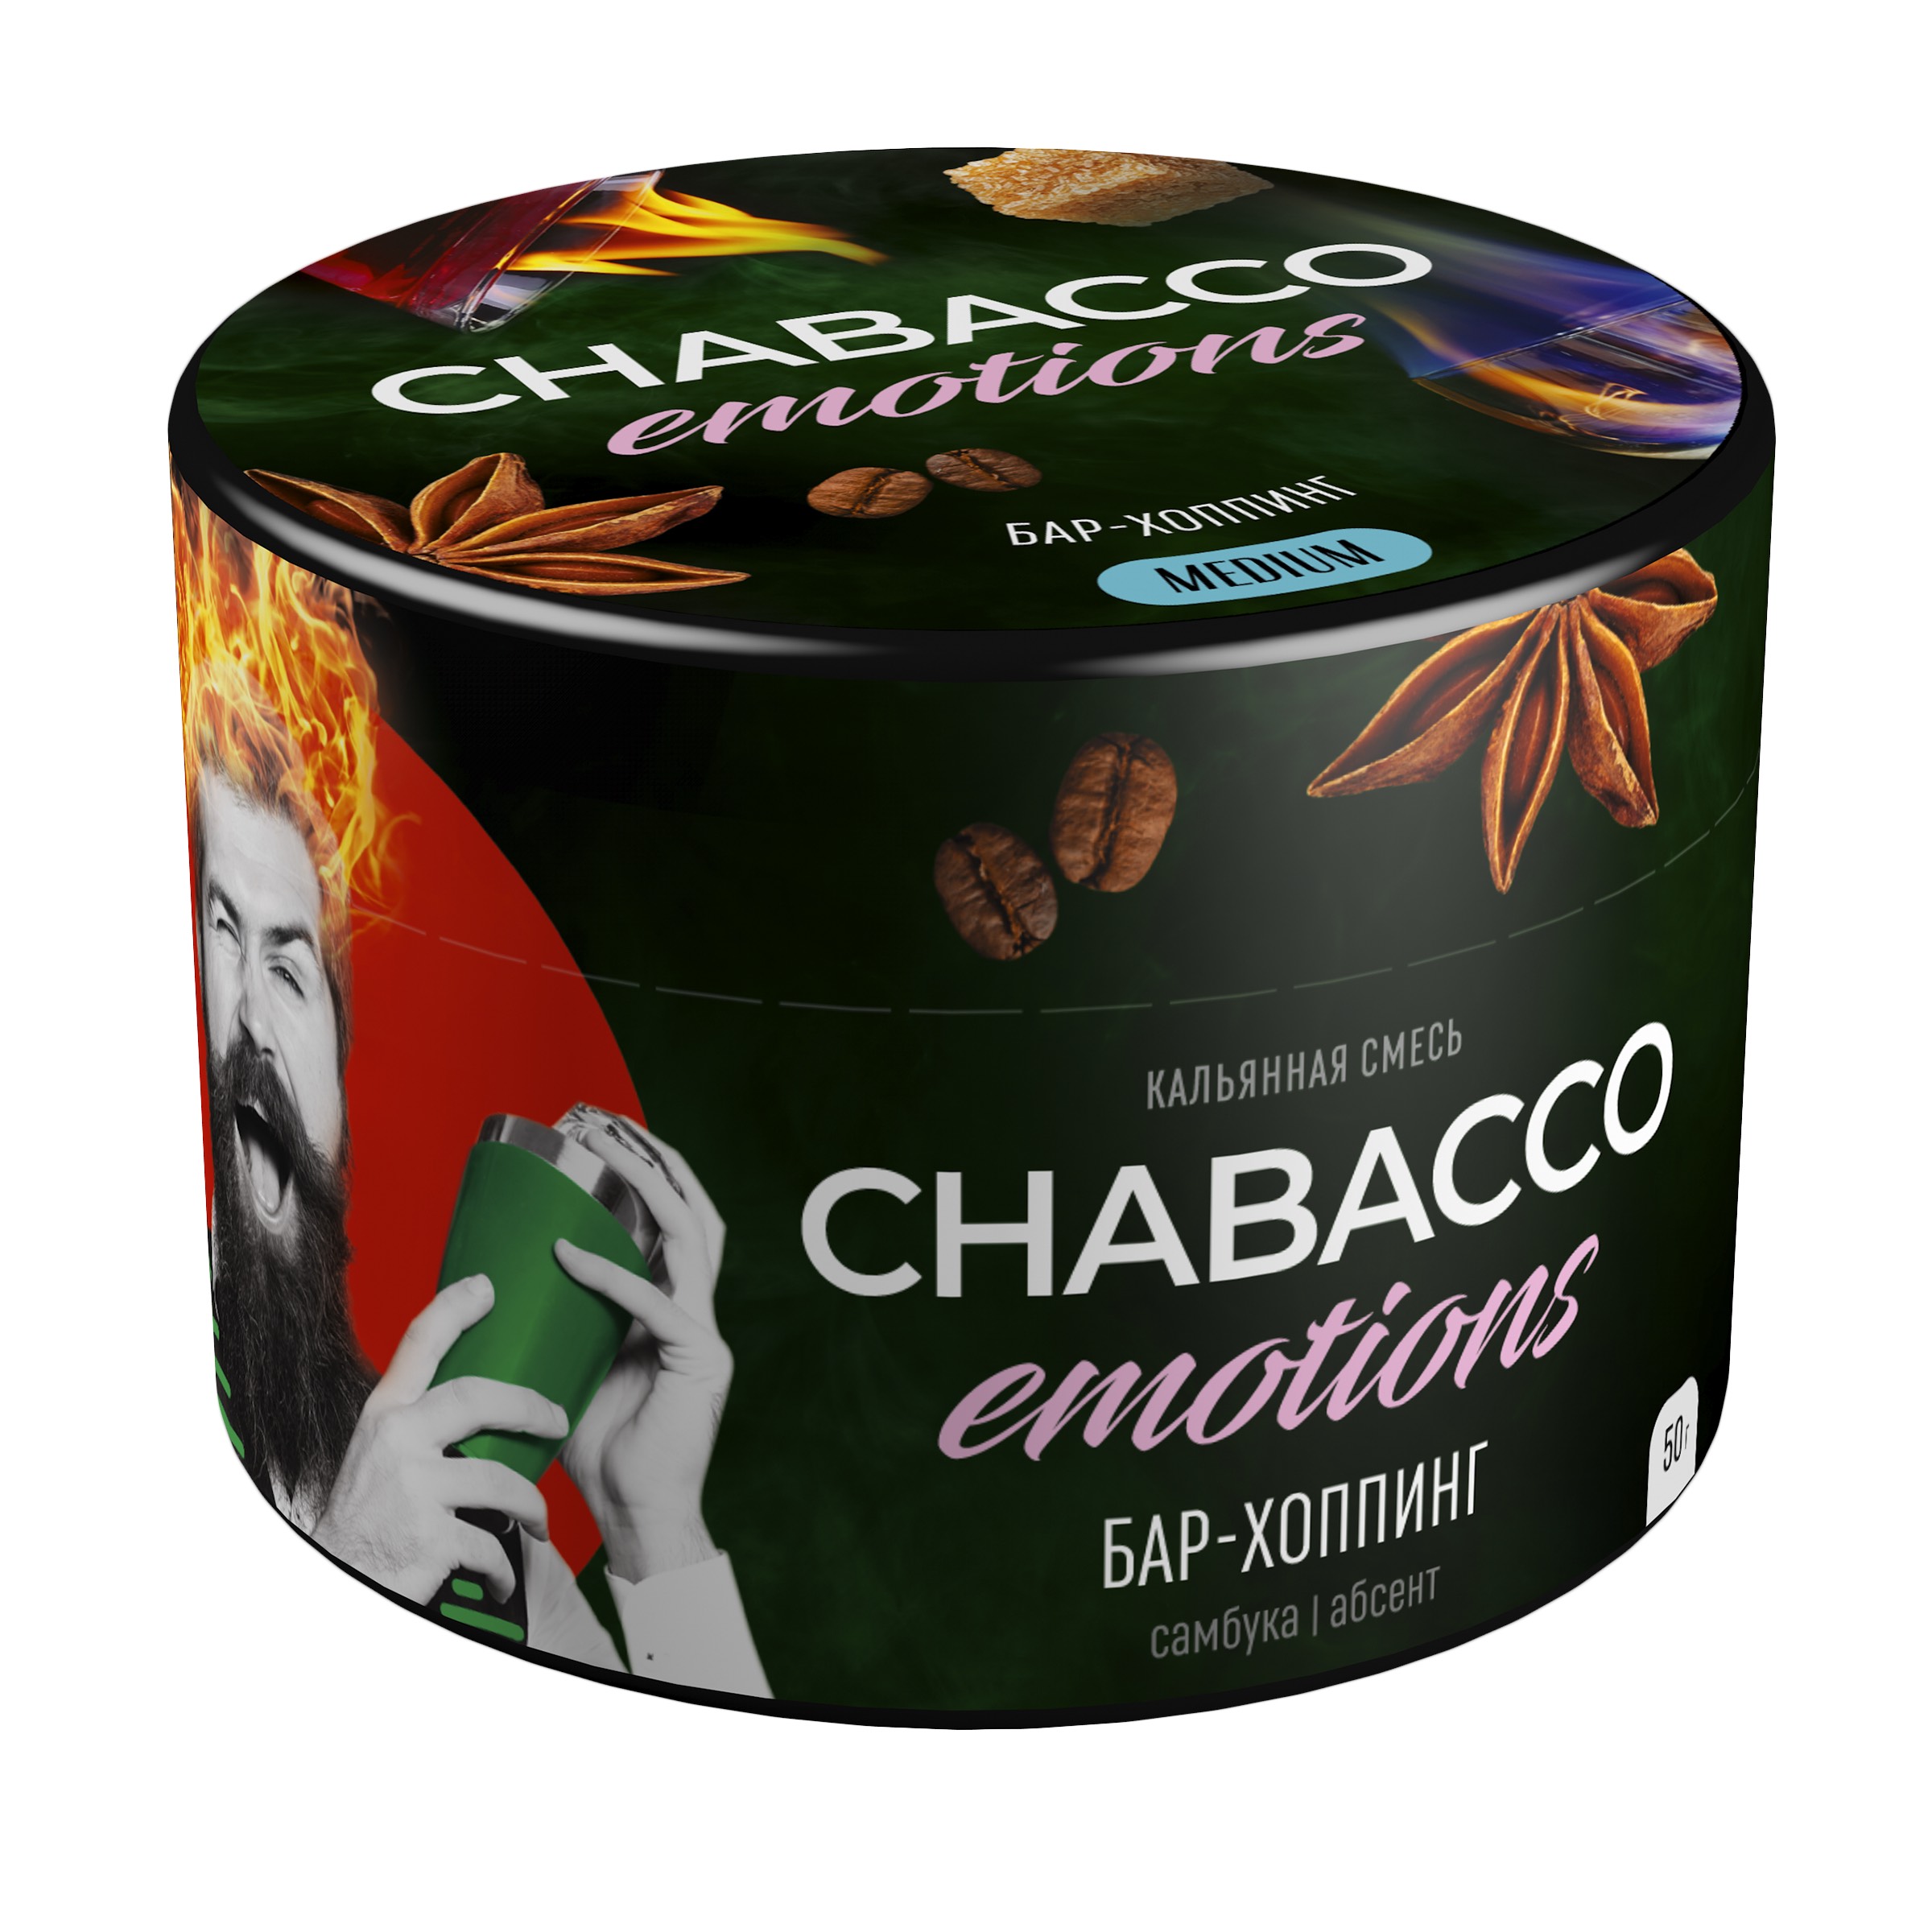 Chabacco - Emotions - Bar-hopping - 50 g